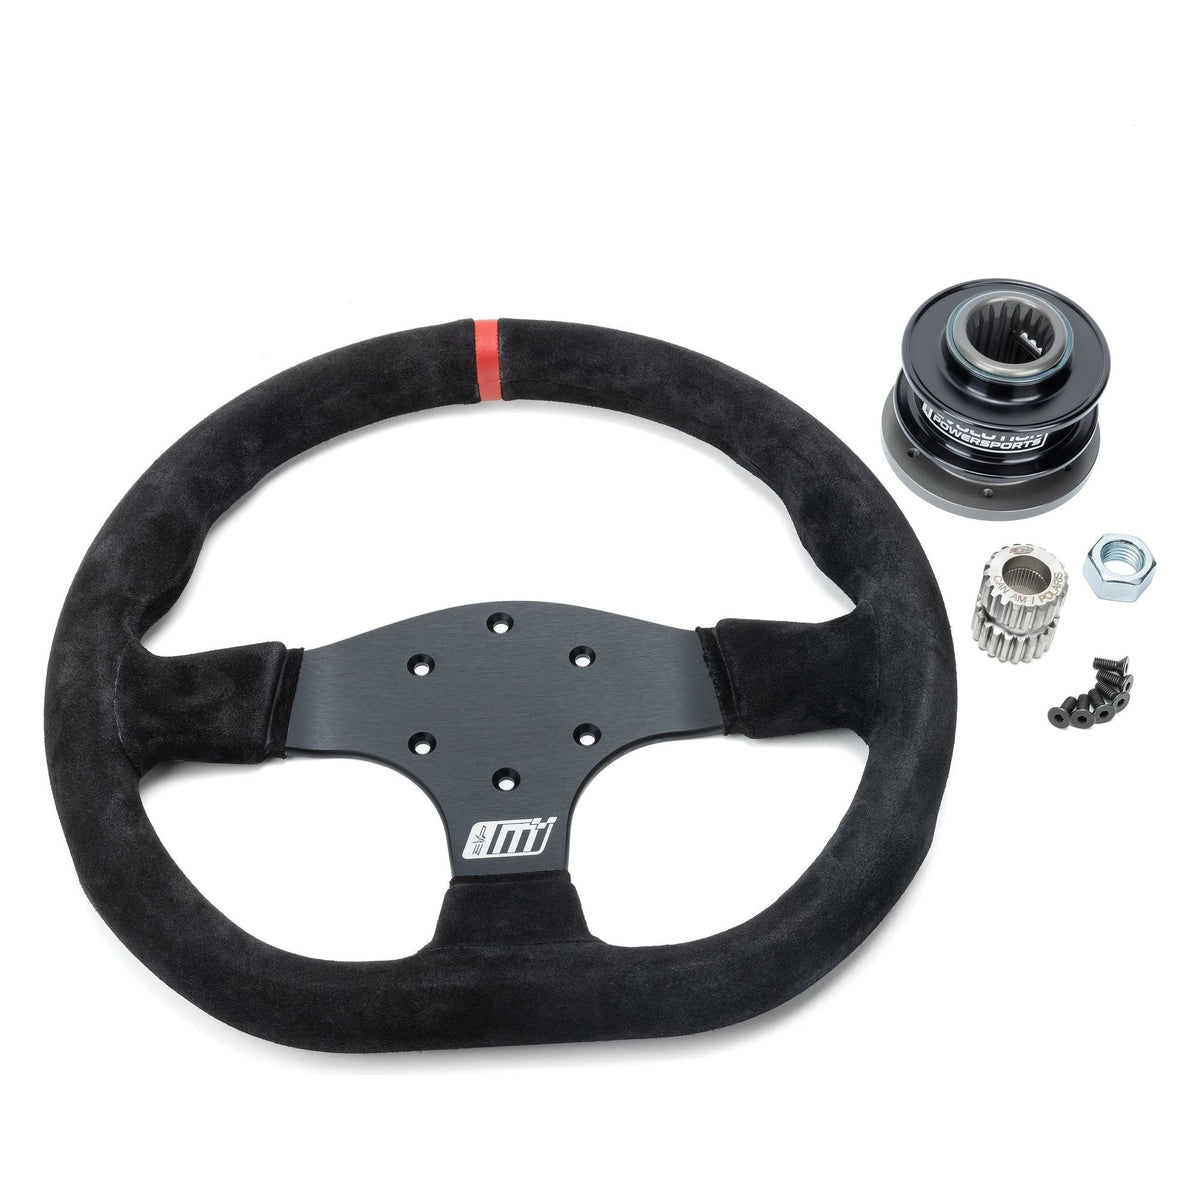 Polaris Steering Wheel & Quick Release Hub Adapter | Evolution Powersports